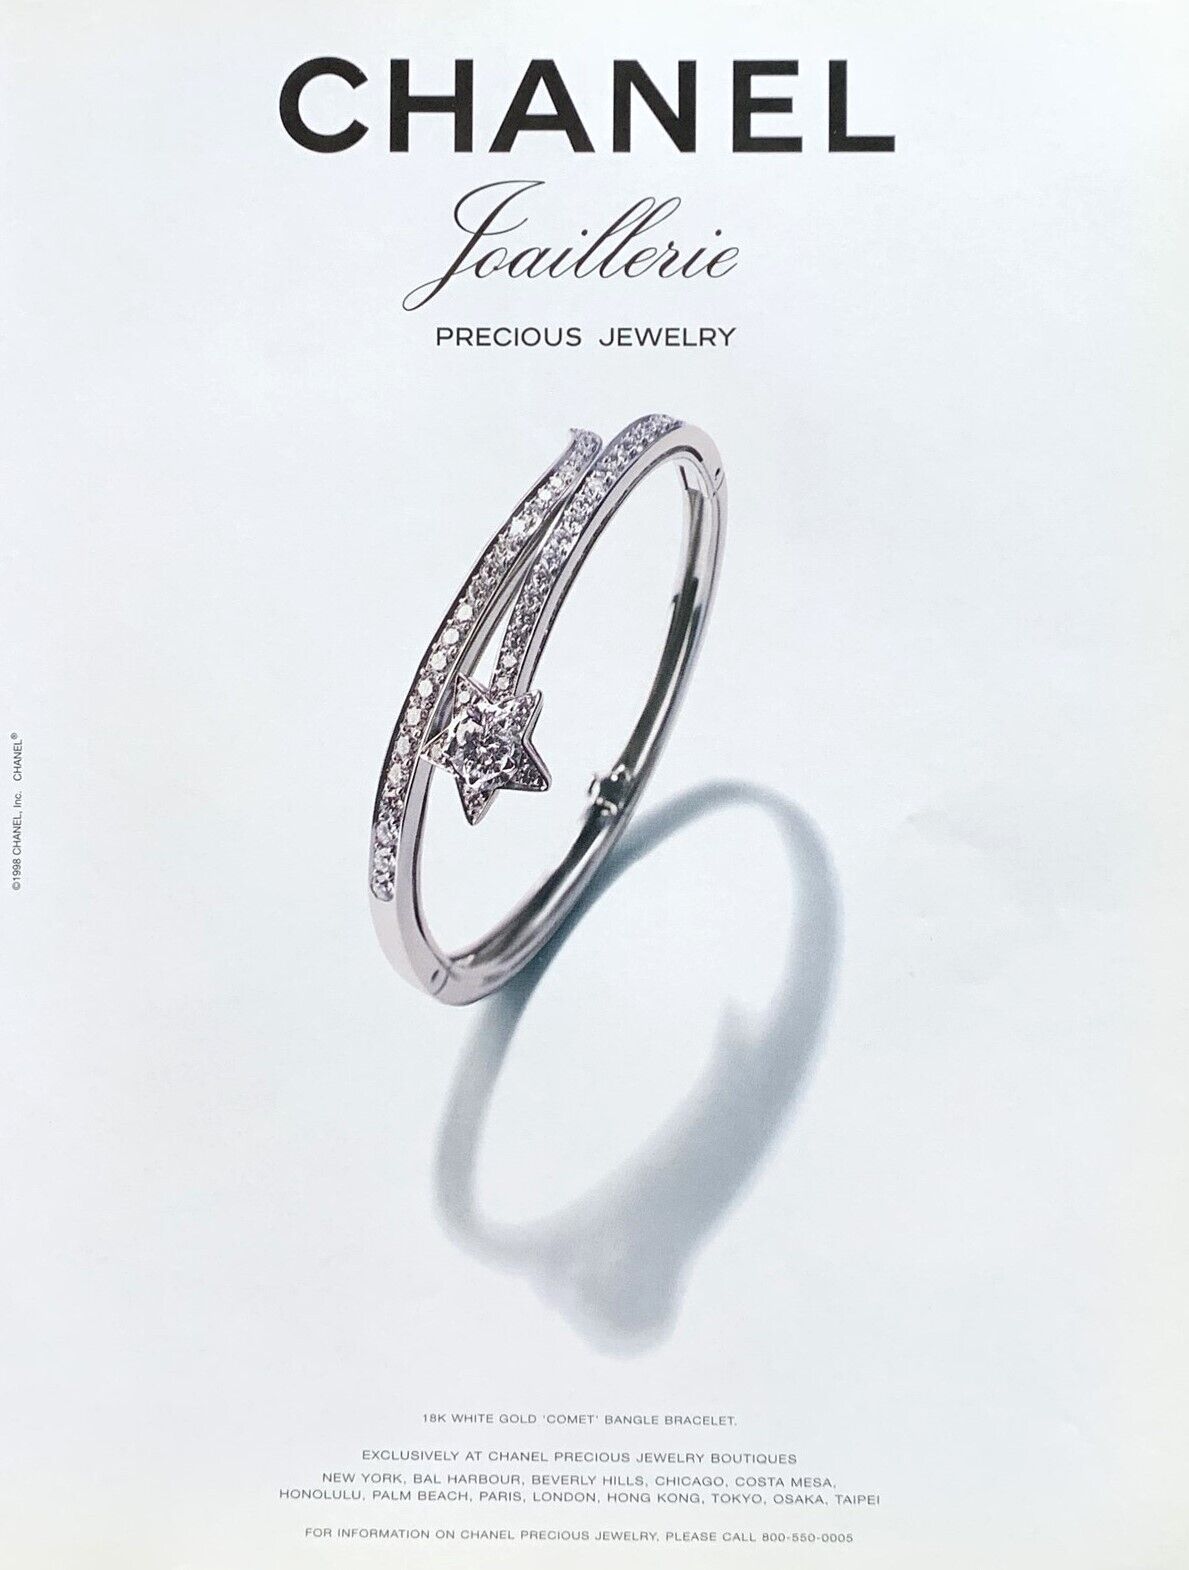 1998 CHANEL Precious Jewelry Original Magazine PRINT AD